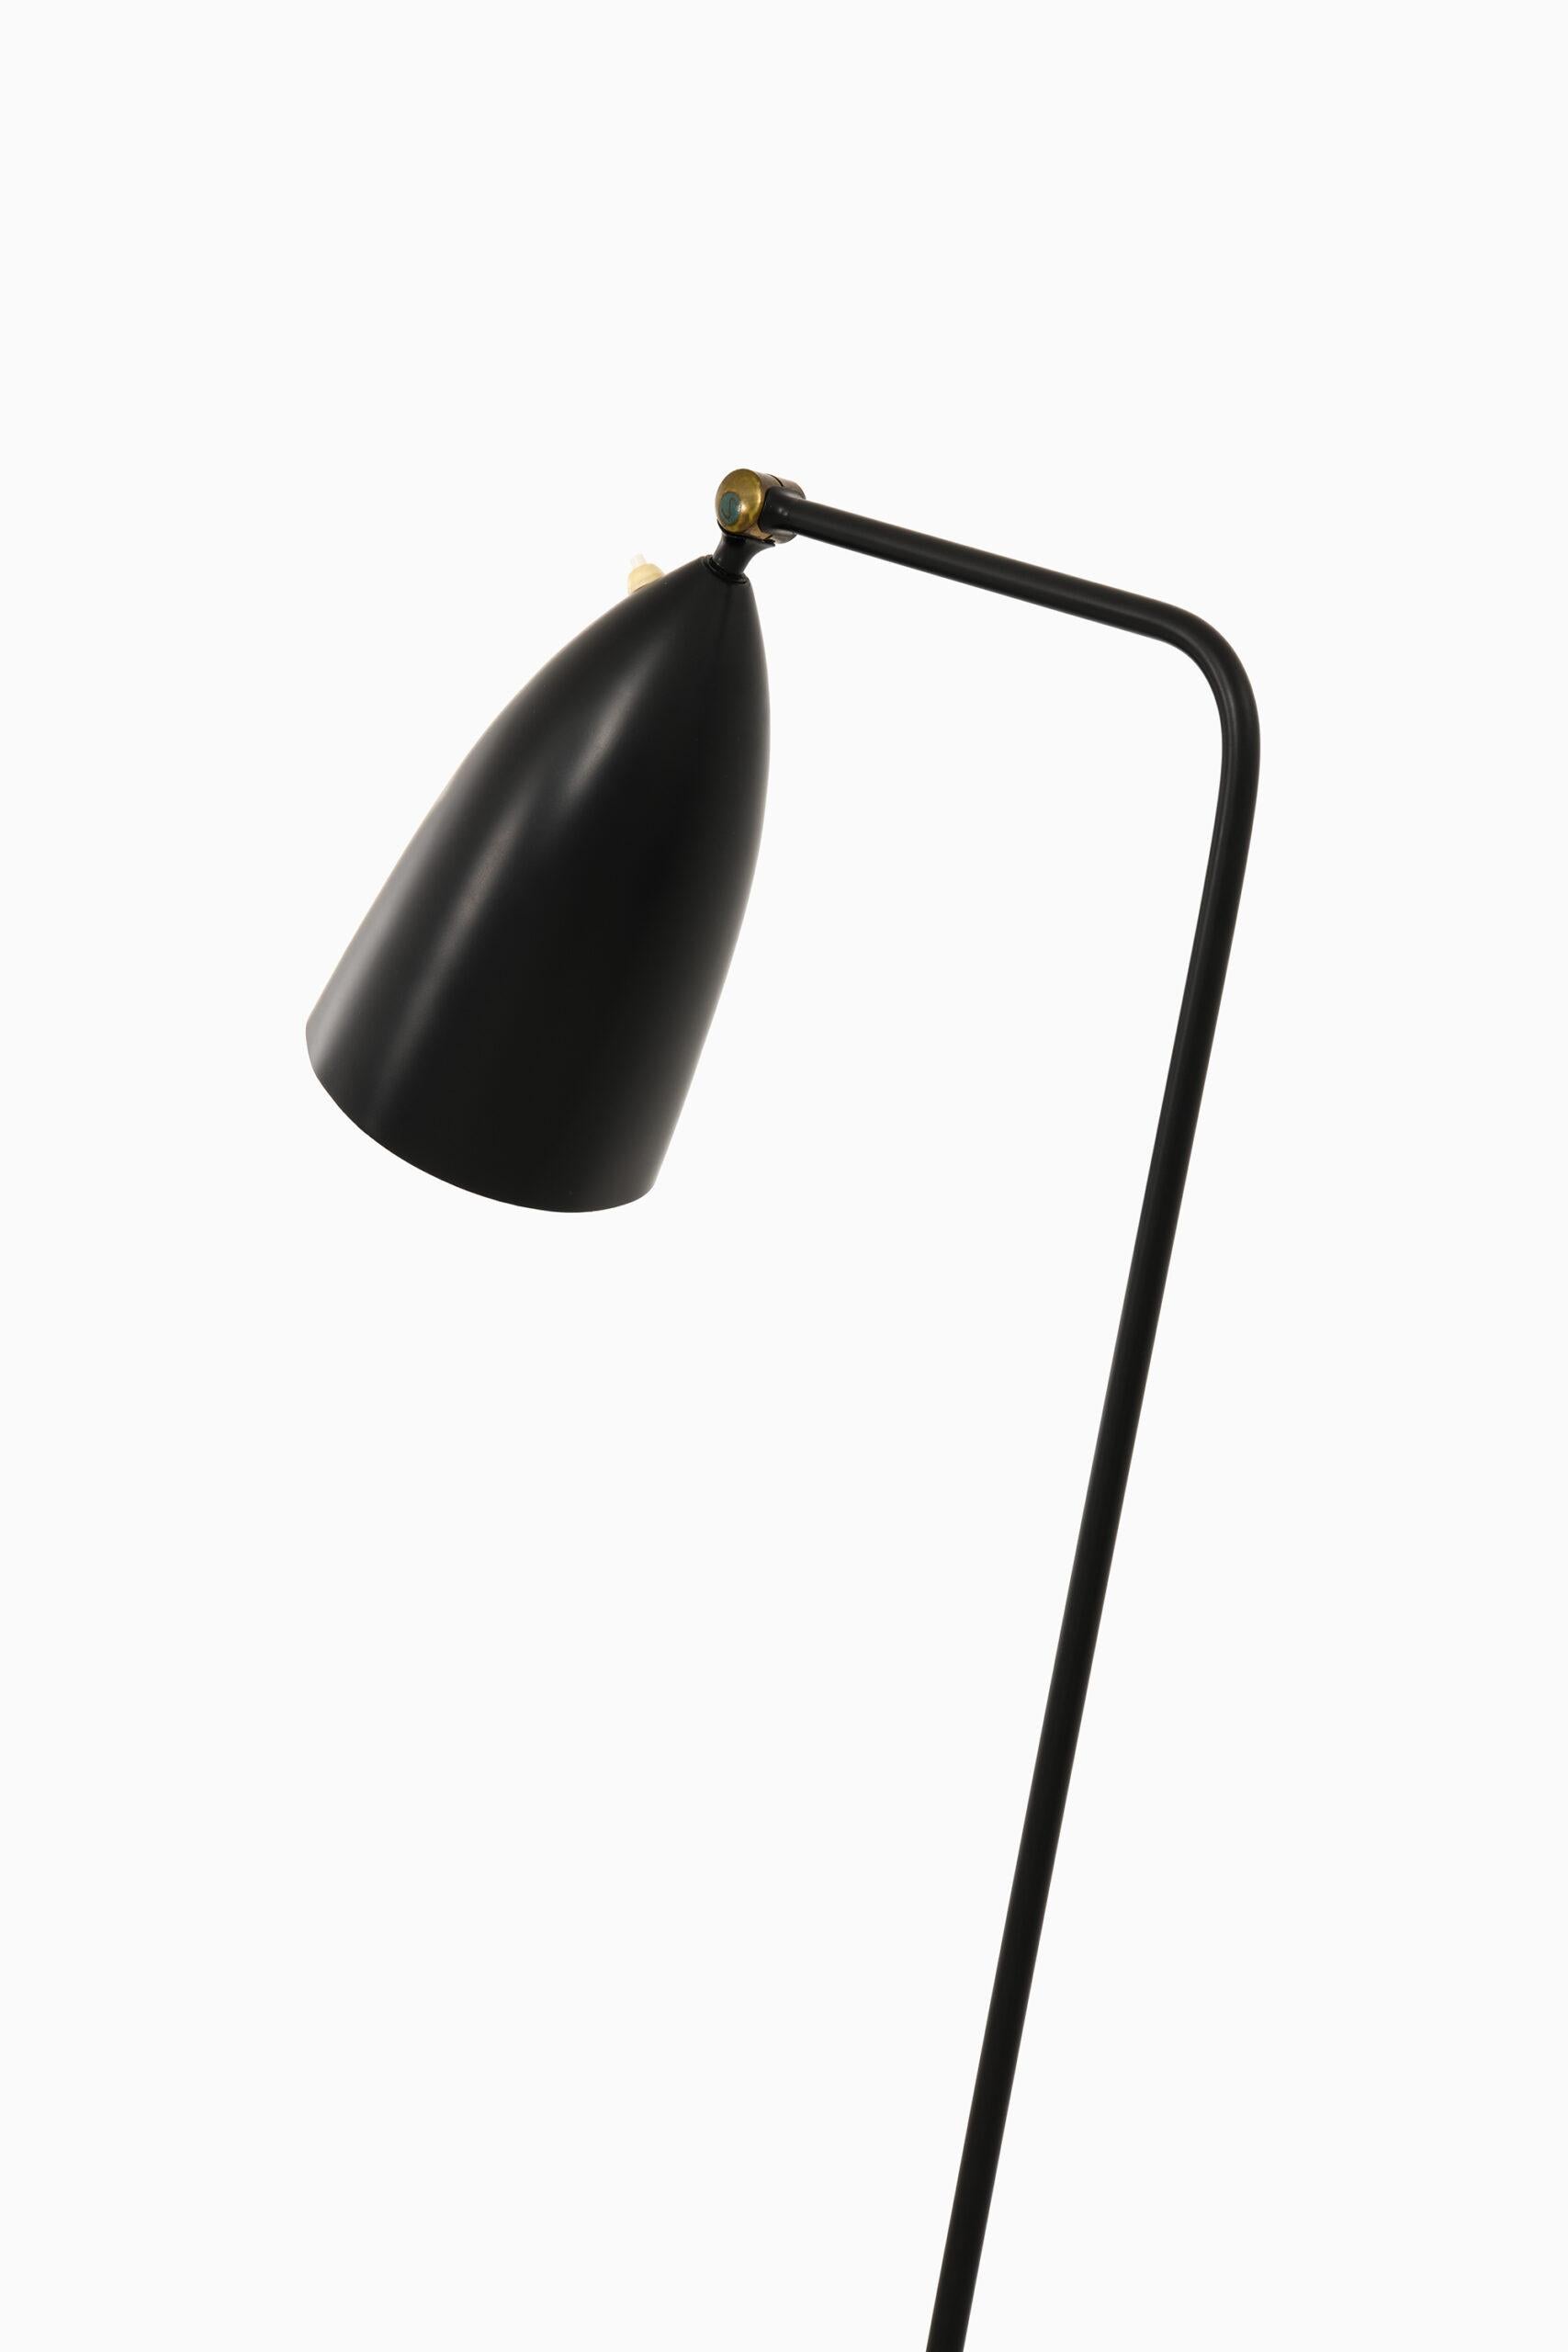 Mid-20th Century Greta Magnusson Grossman Floor Lamp Model G-33 / Grasshopper Produced by Bergbom For Sale